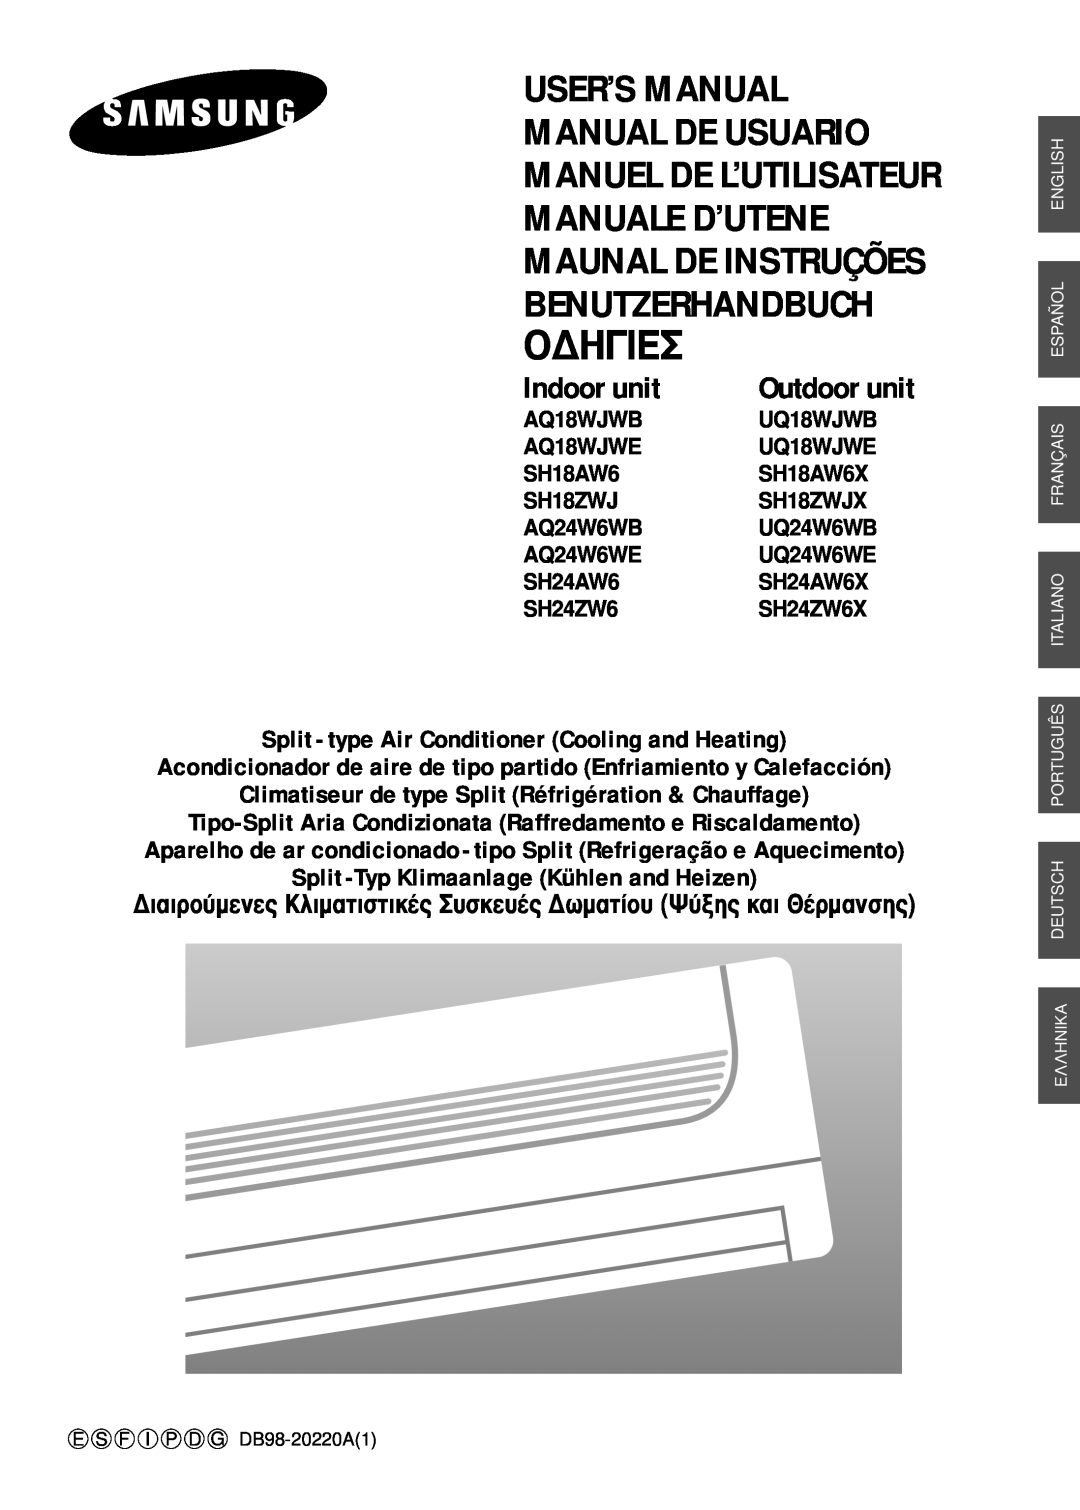 Samsung SH24AW6 manual User’S Manual Manual De Usuario Manuel De L’Utilisateur, Manuale D’Utene, Benutzerhandbuch, √¢∏π∂ 